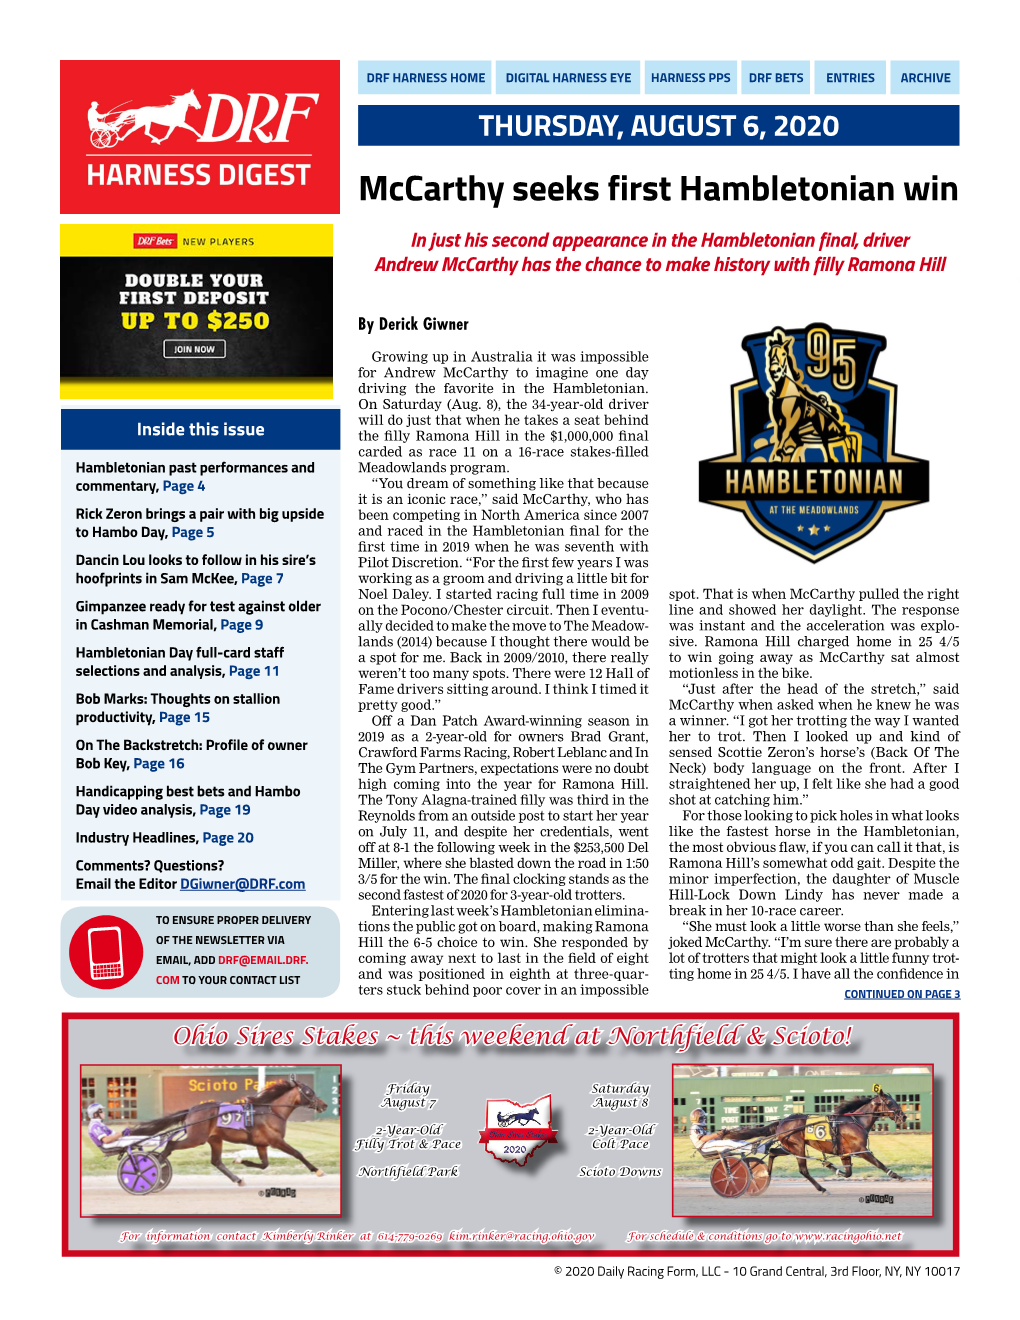 Mccarthy Seeks First Hambletonian Win